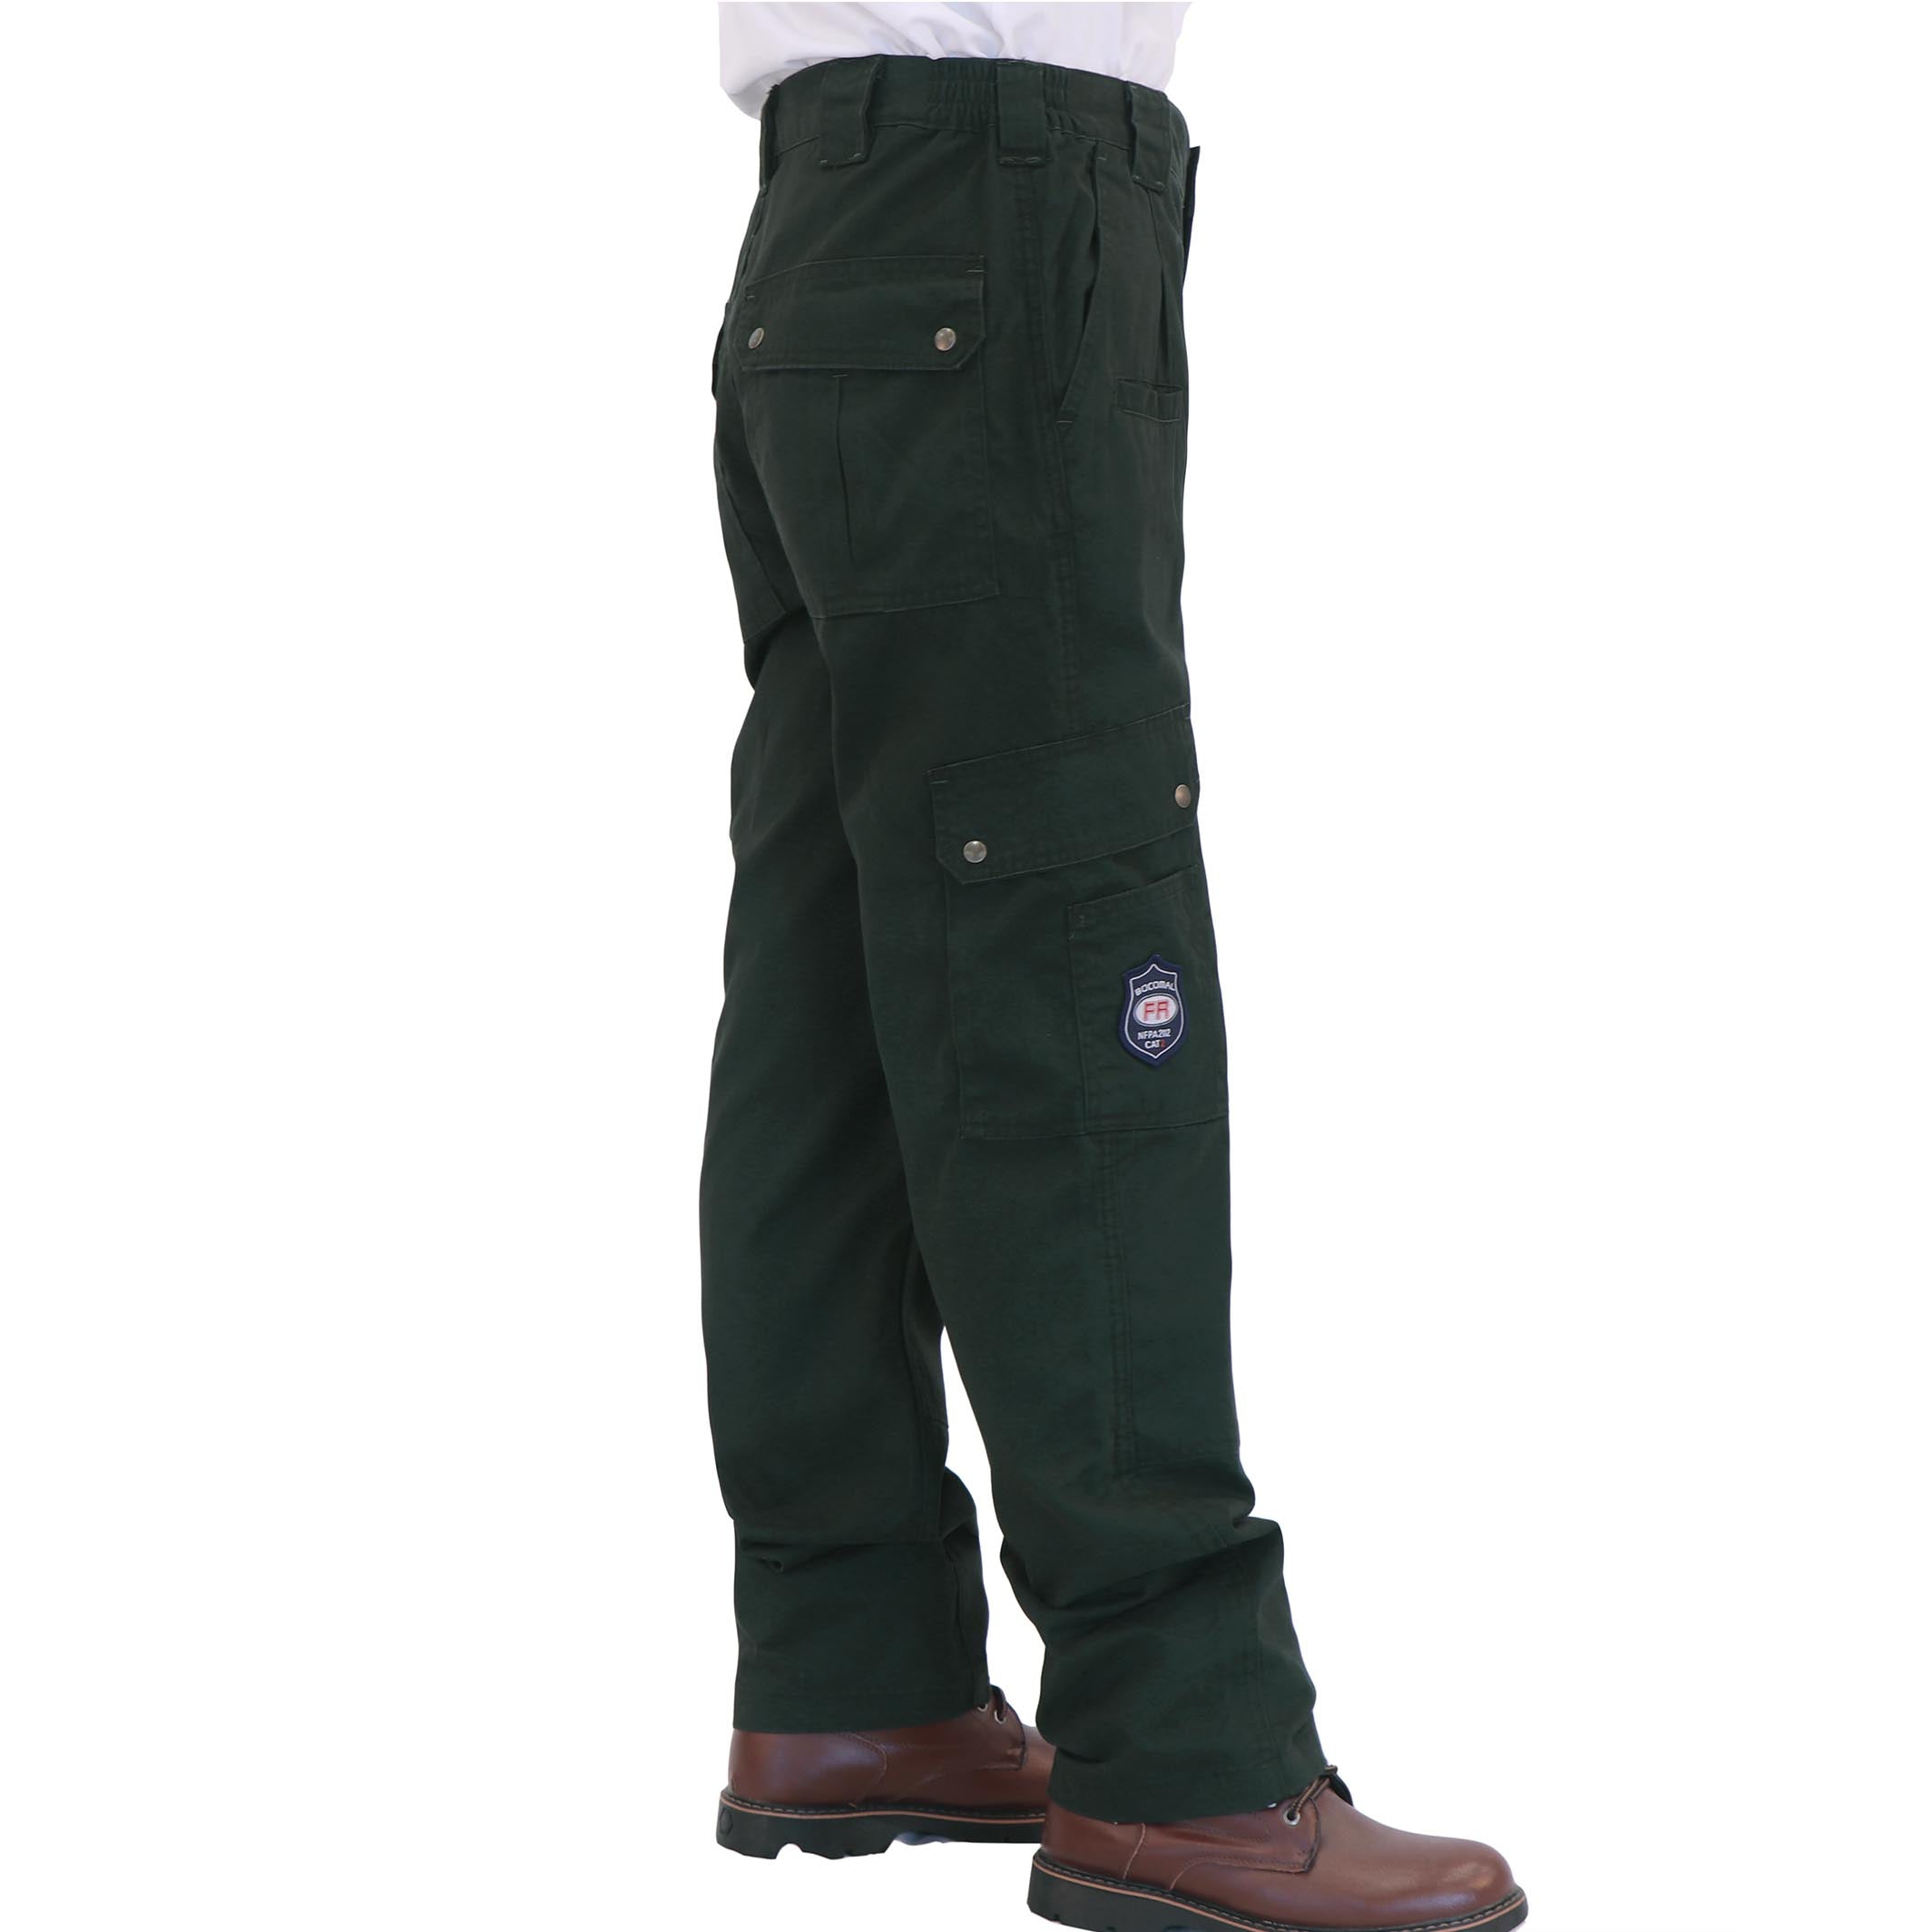  BOCOMAL FR Pants for Men Cargo Flame Resistant Pants